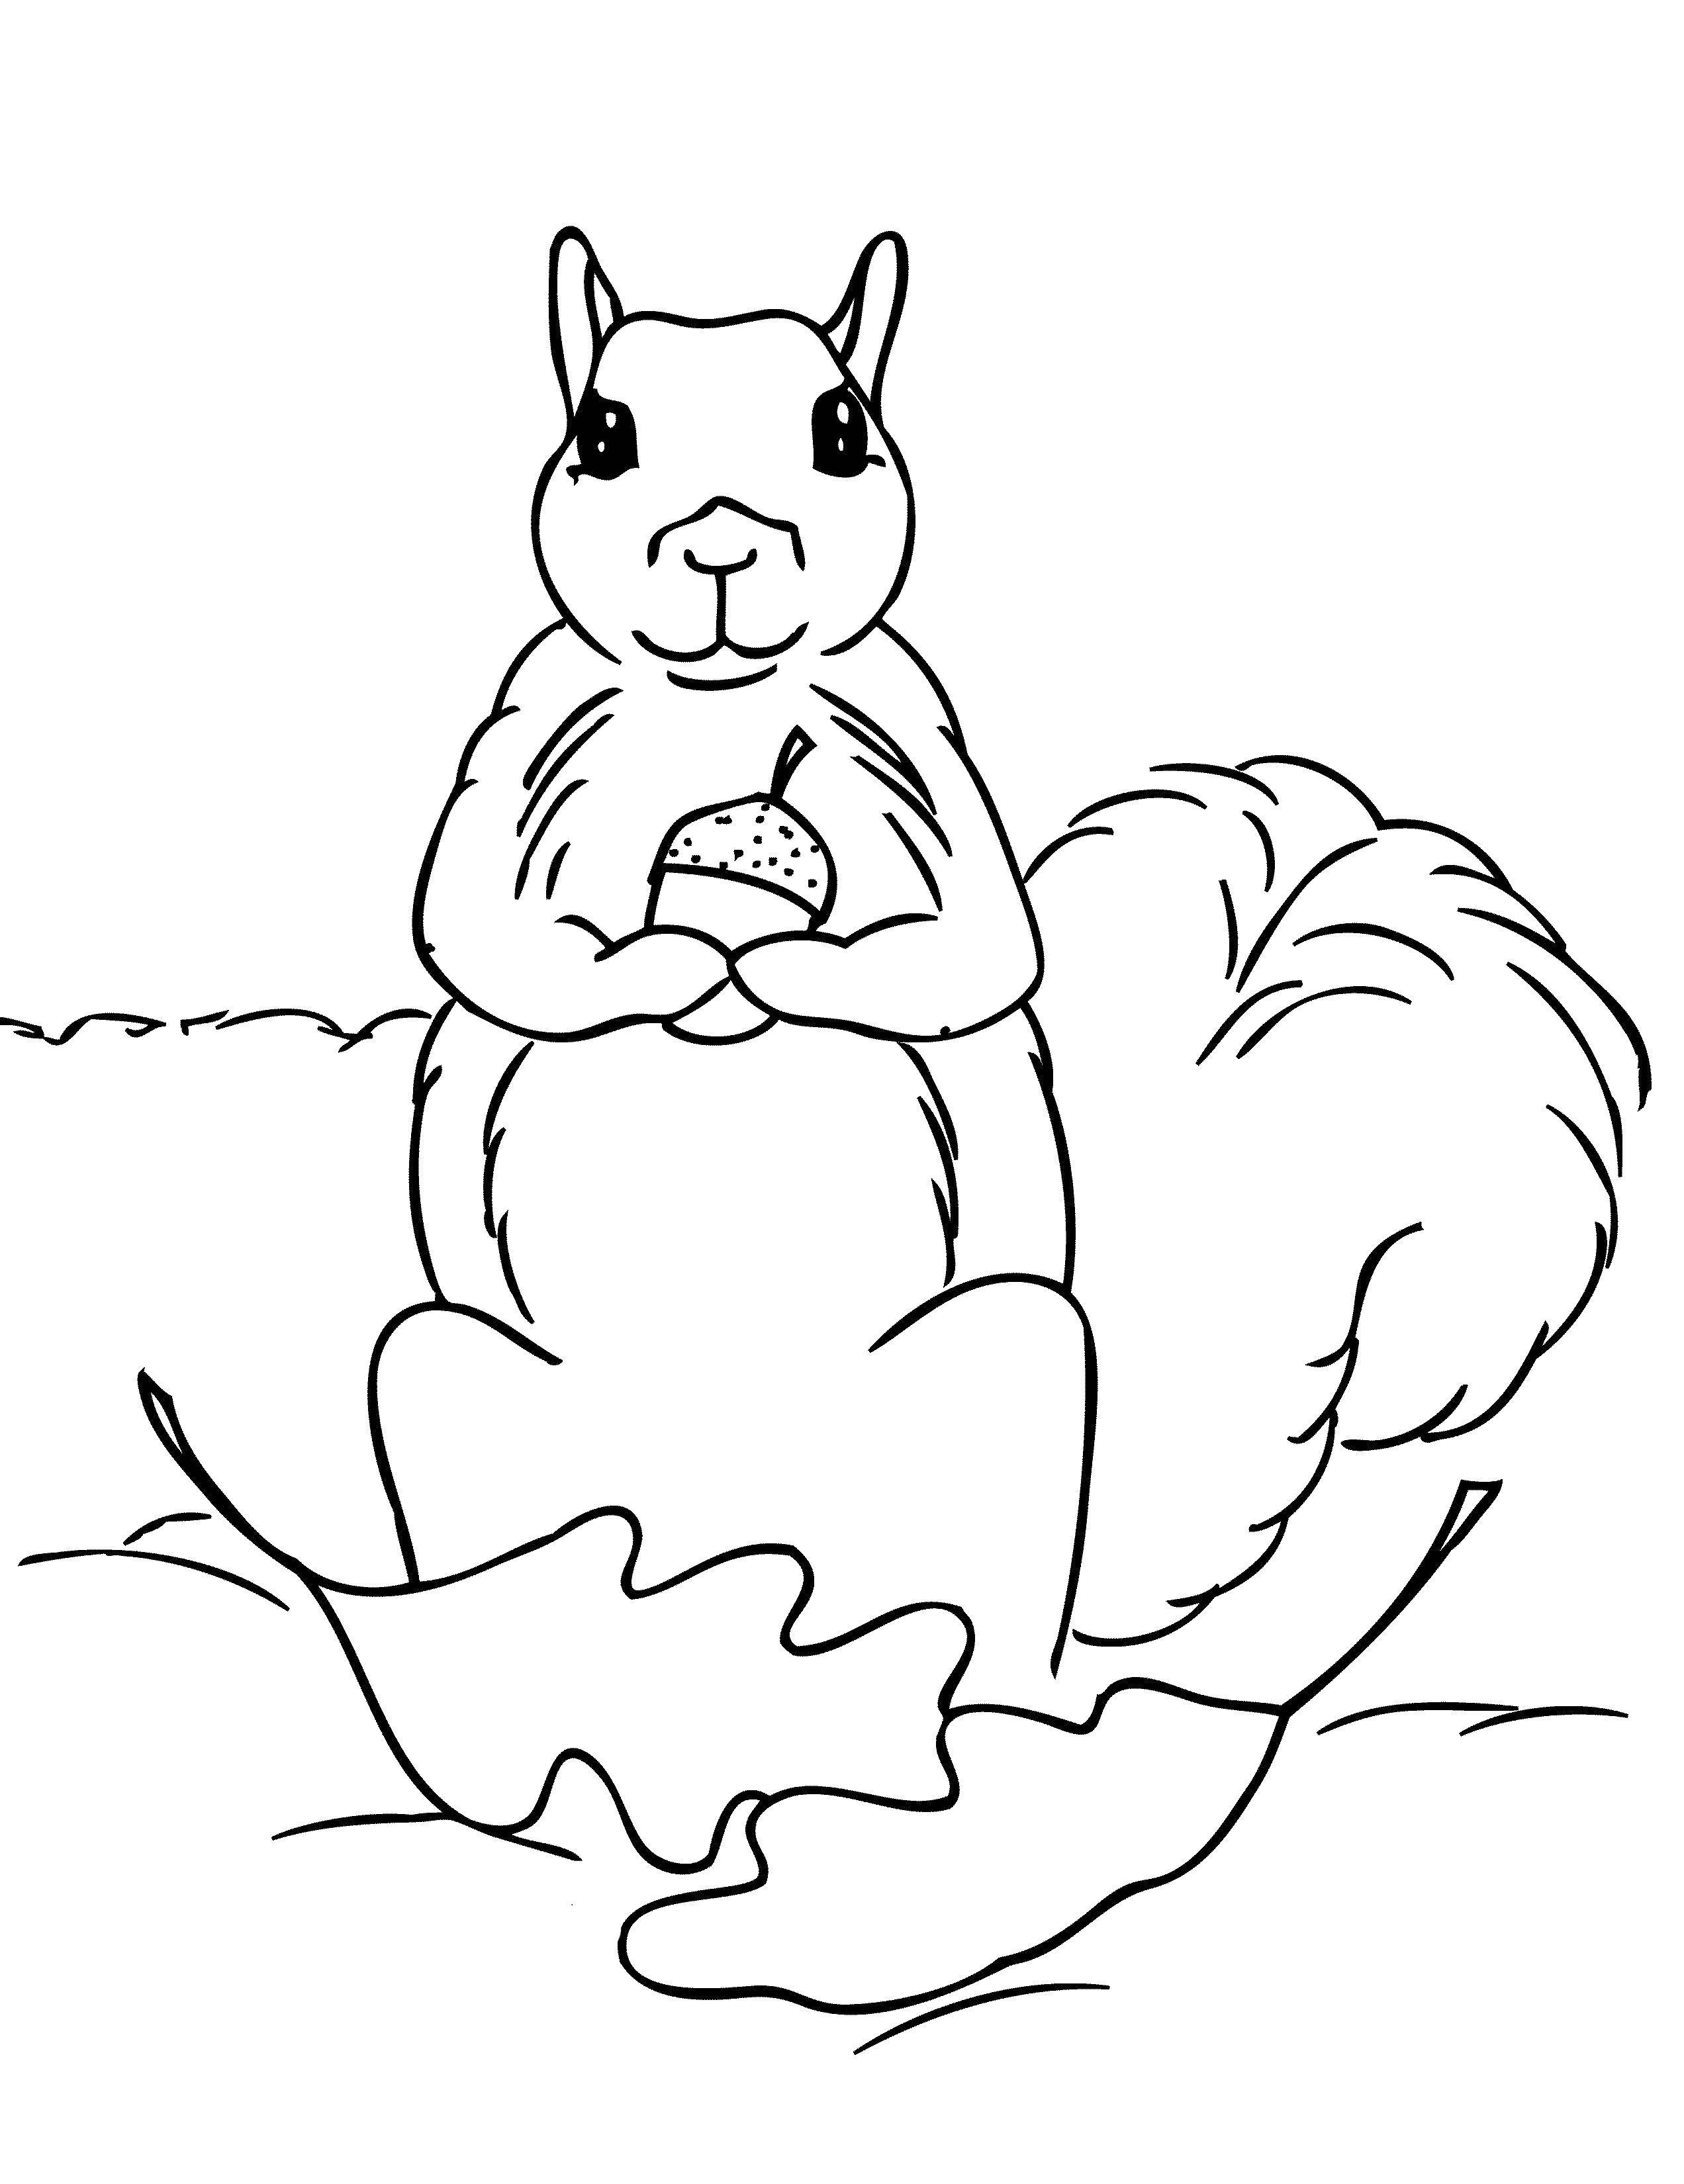 Coloring Squirrel with acorn. Category squirrel. Tags:  animals, squirrel, squirrel, acorn.